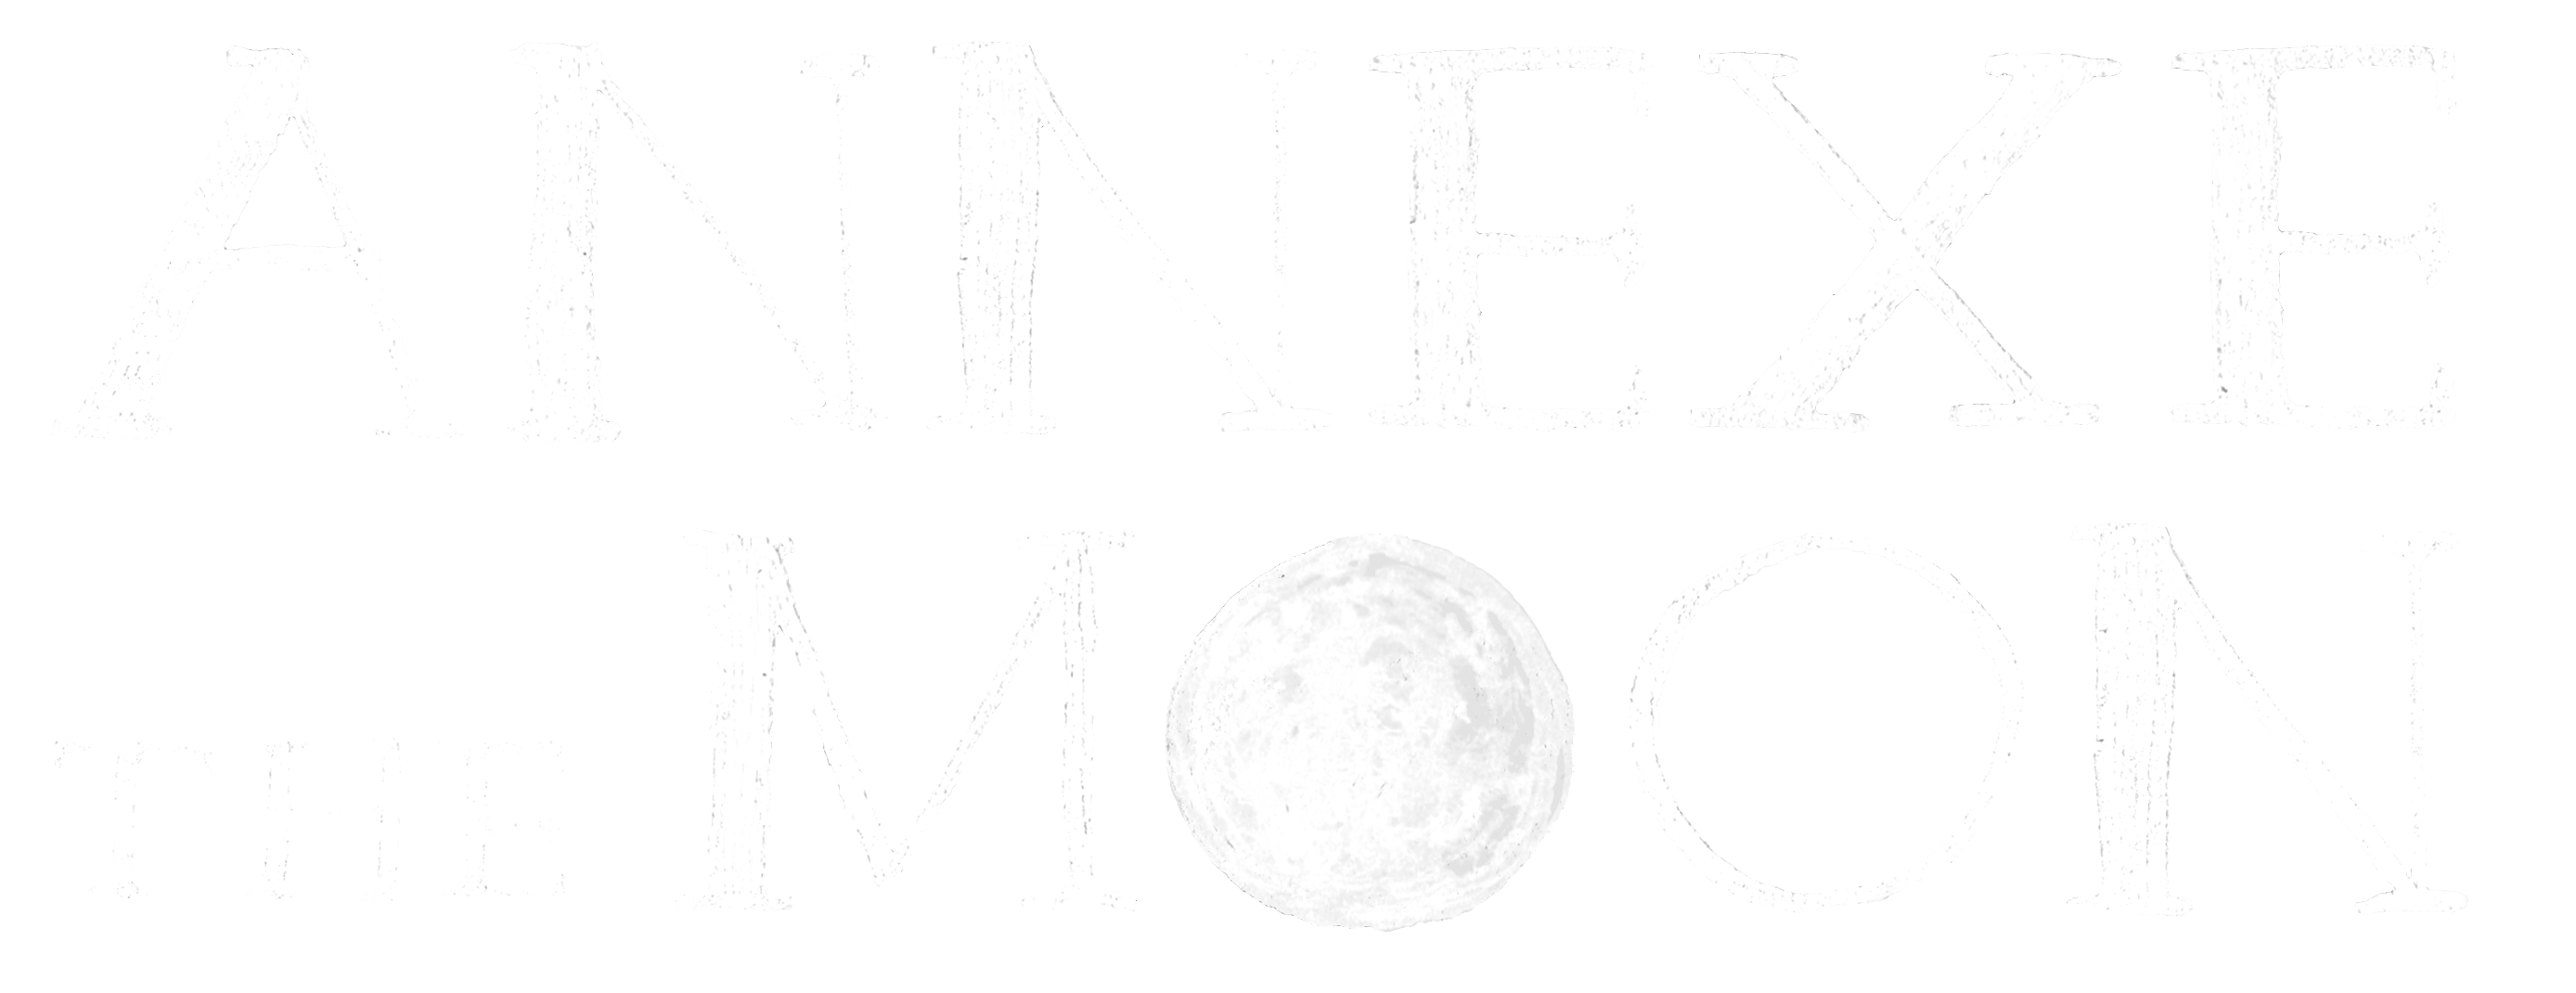 Annexe The Moon